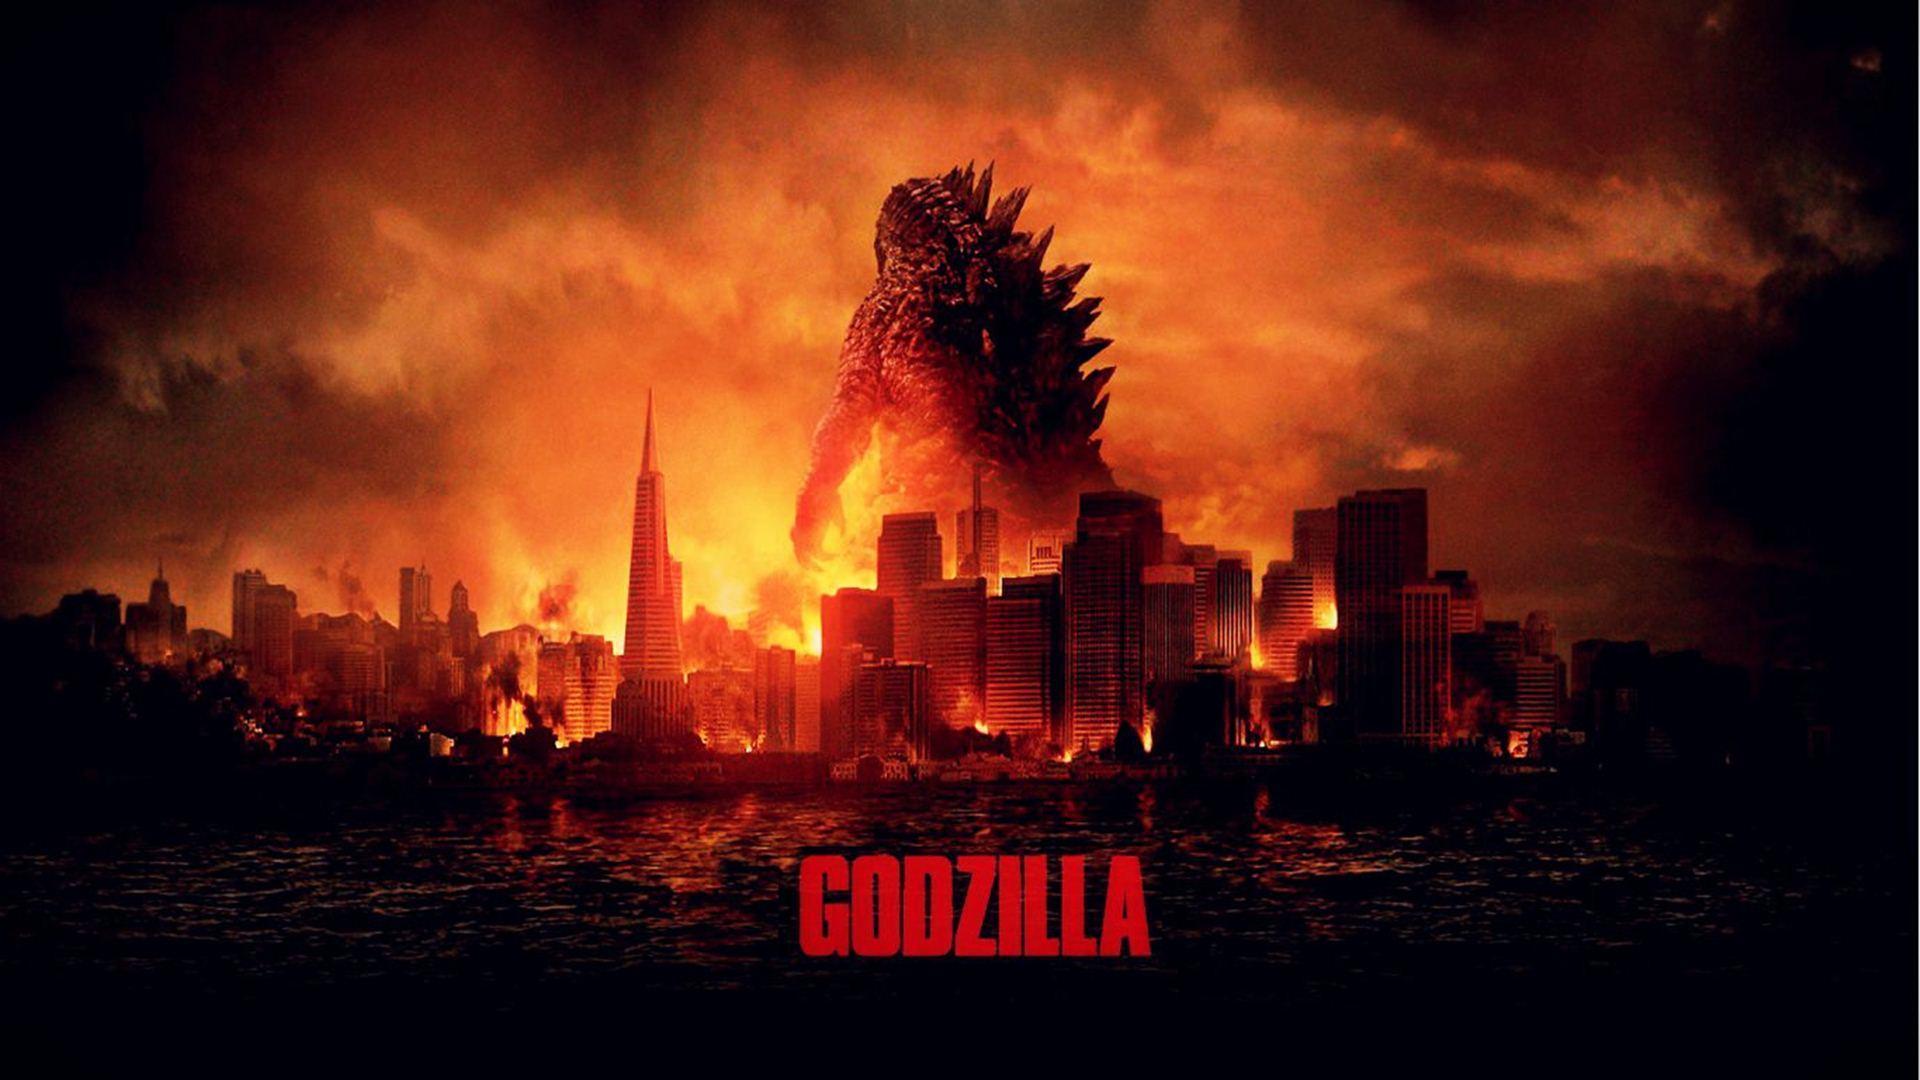 Godzilla 2014 HD Wallpaper. Download High Quality Resolution